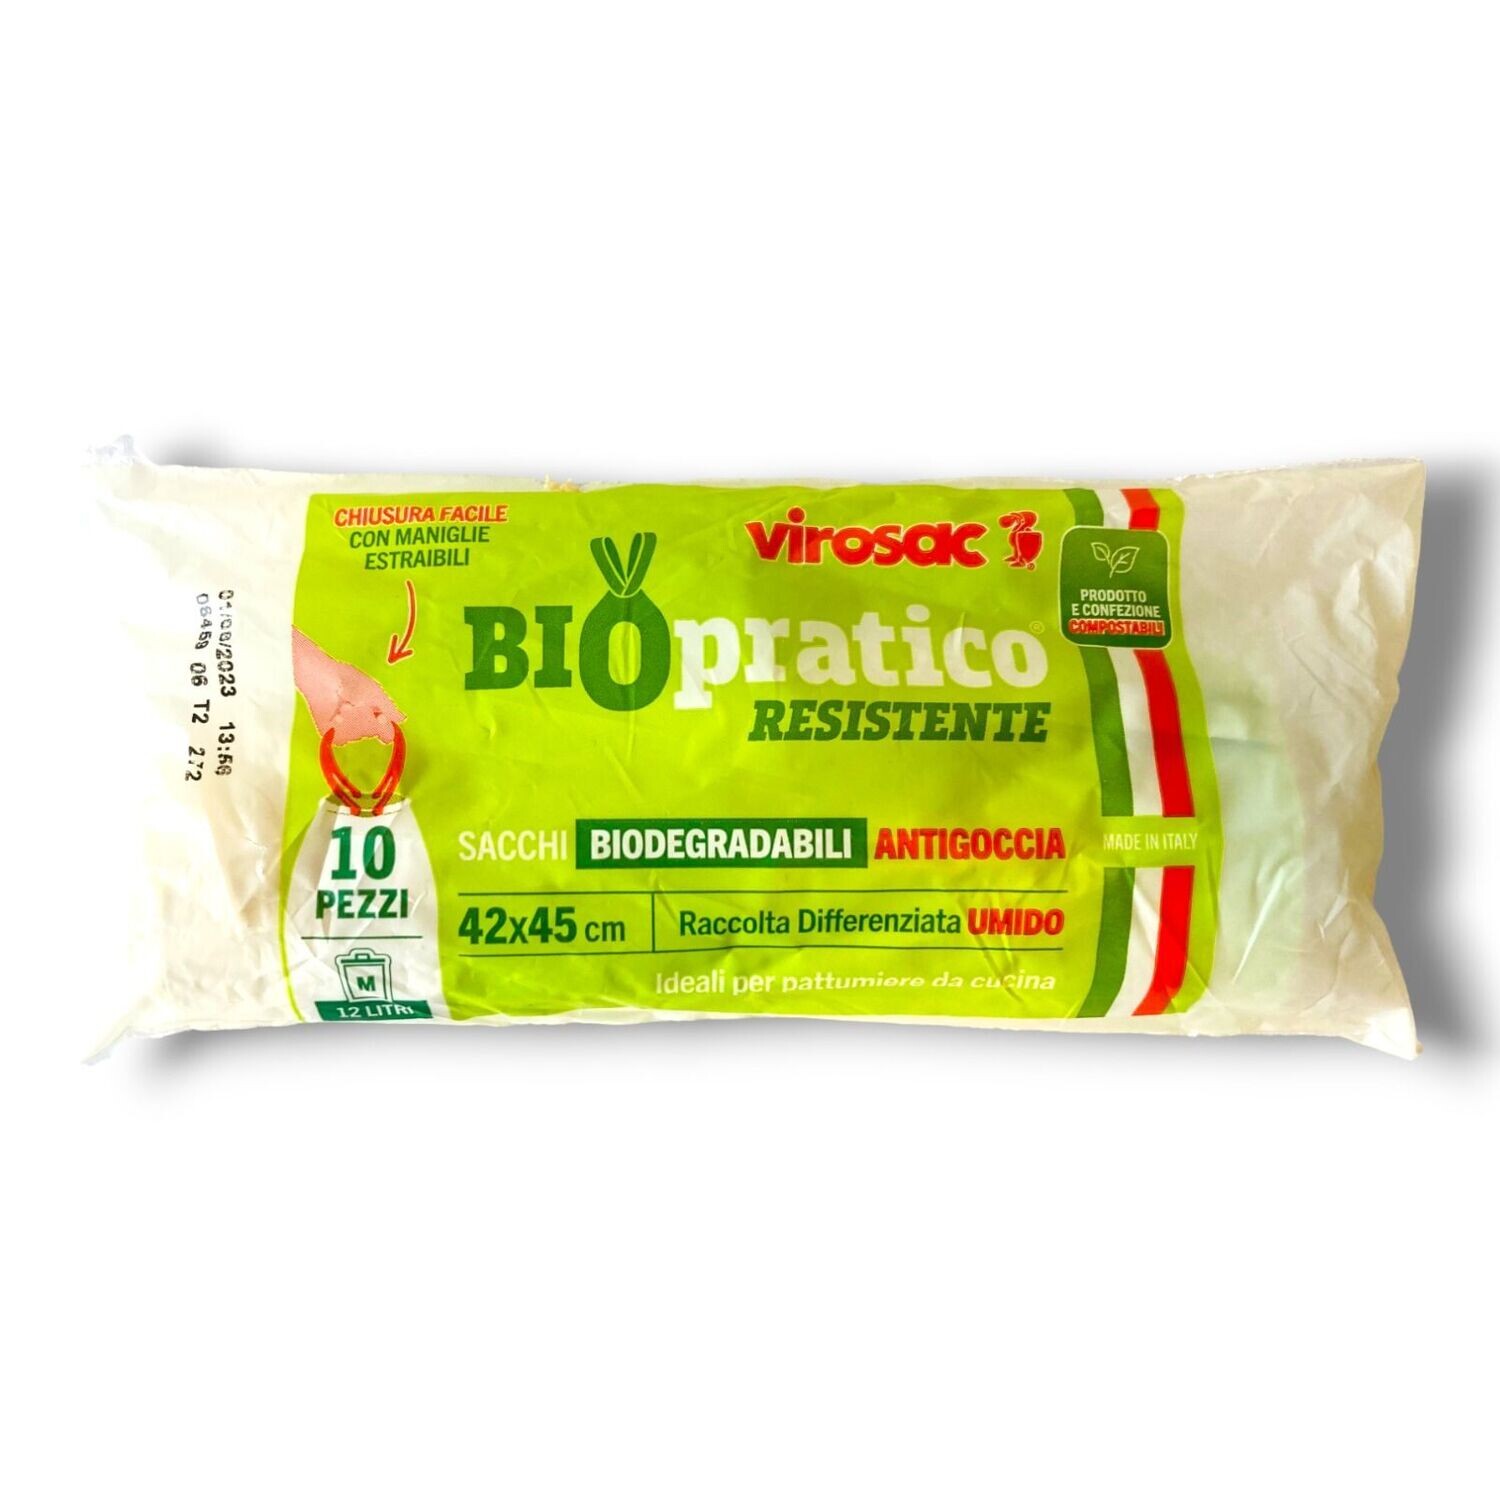 Sacco Bio pratico e resistente biodegradabile Antigoccia per Raccolta Differenziata Umido